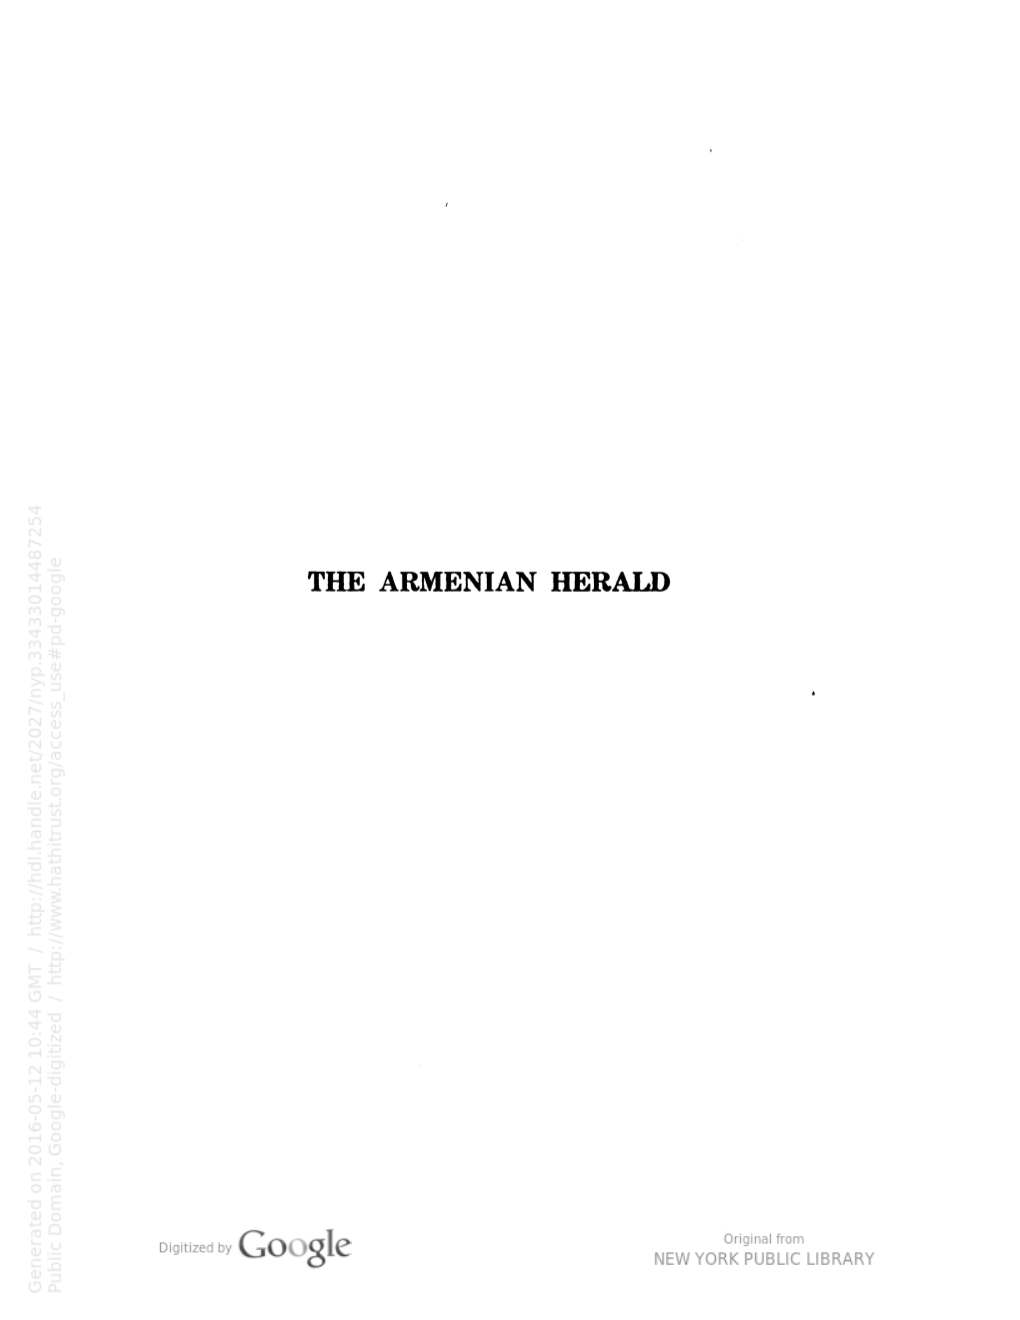 The Armenian Herald / Armenian National Union of America